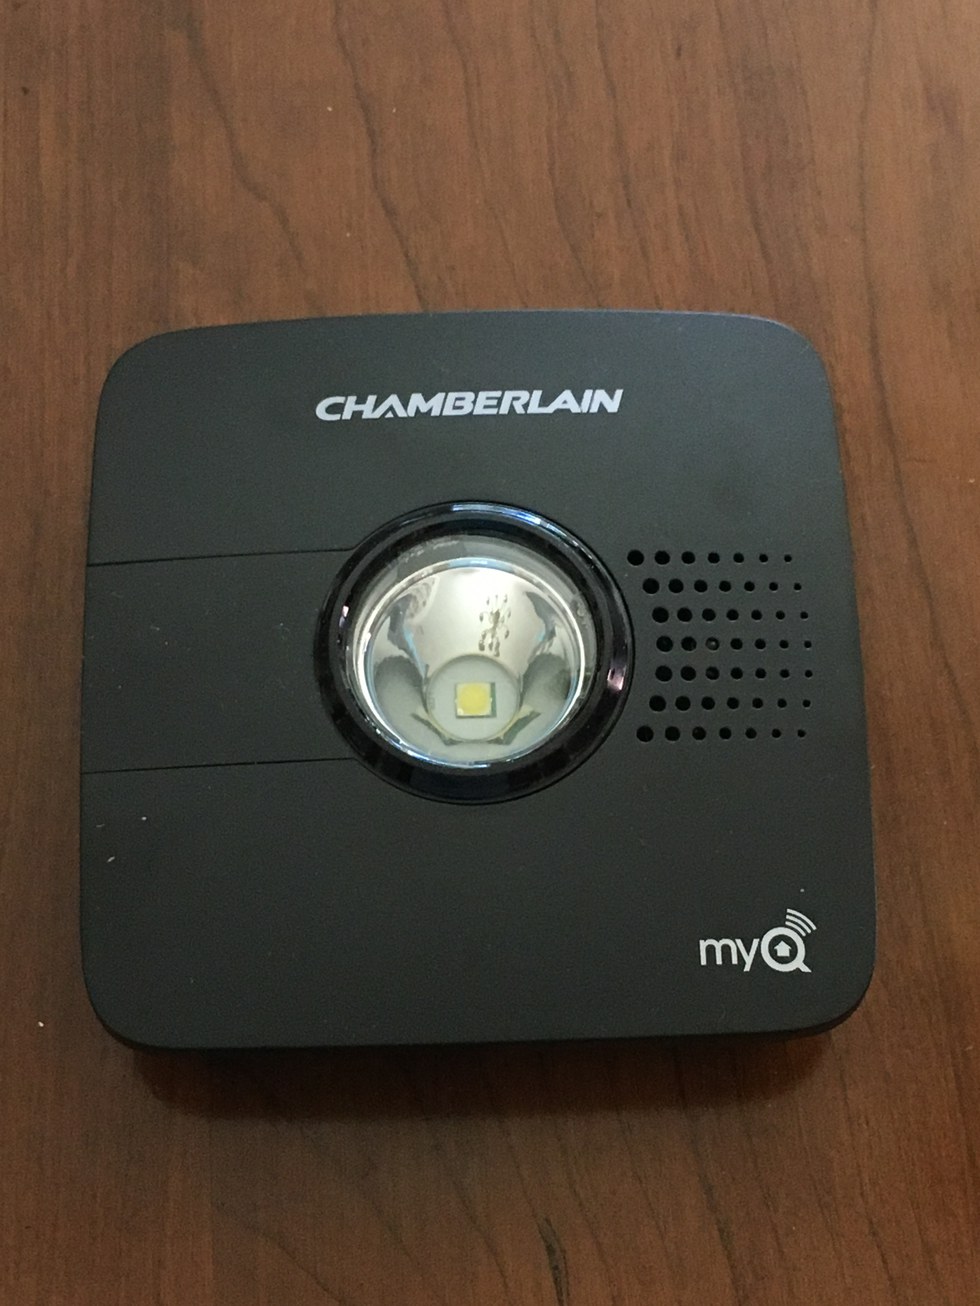 Chamberlain MyQ Garage Wi-Fi Hub